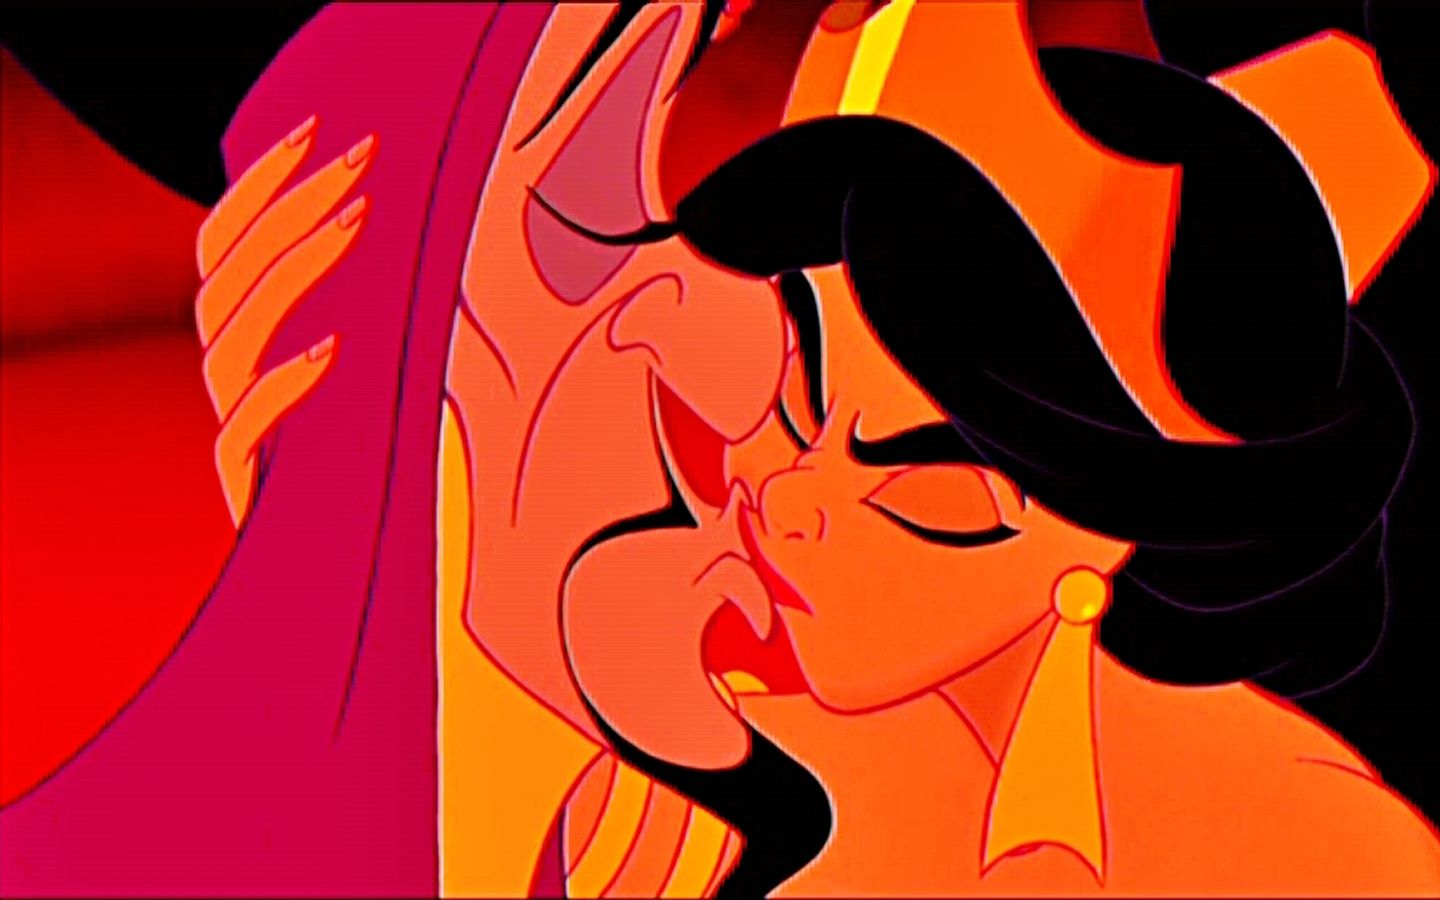 Jafar And Jasmine.com VS Disneywallpaper.info